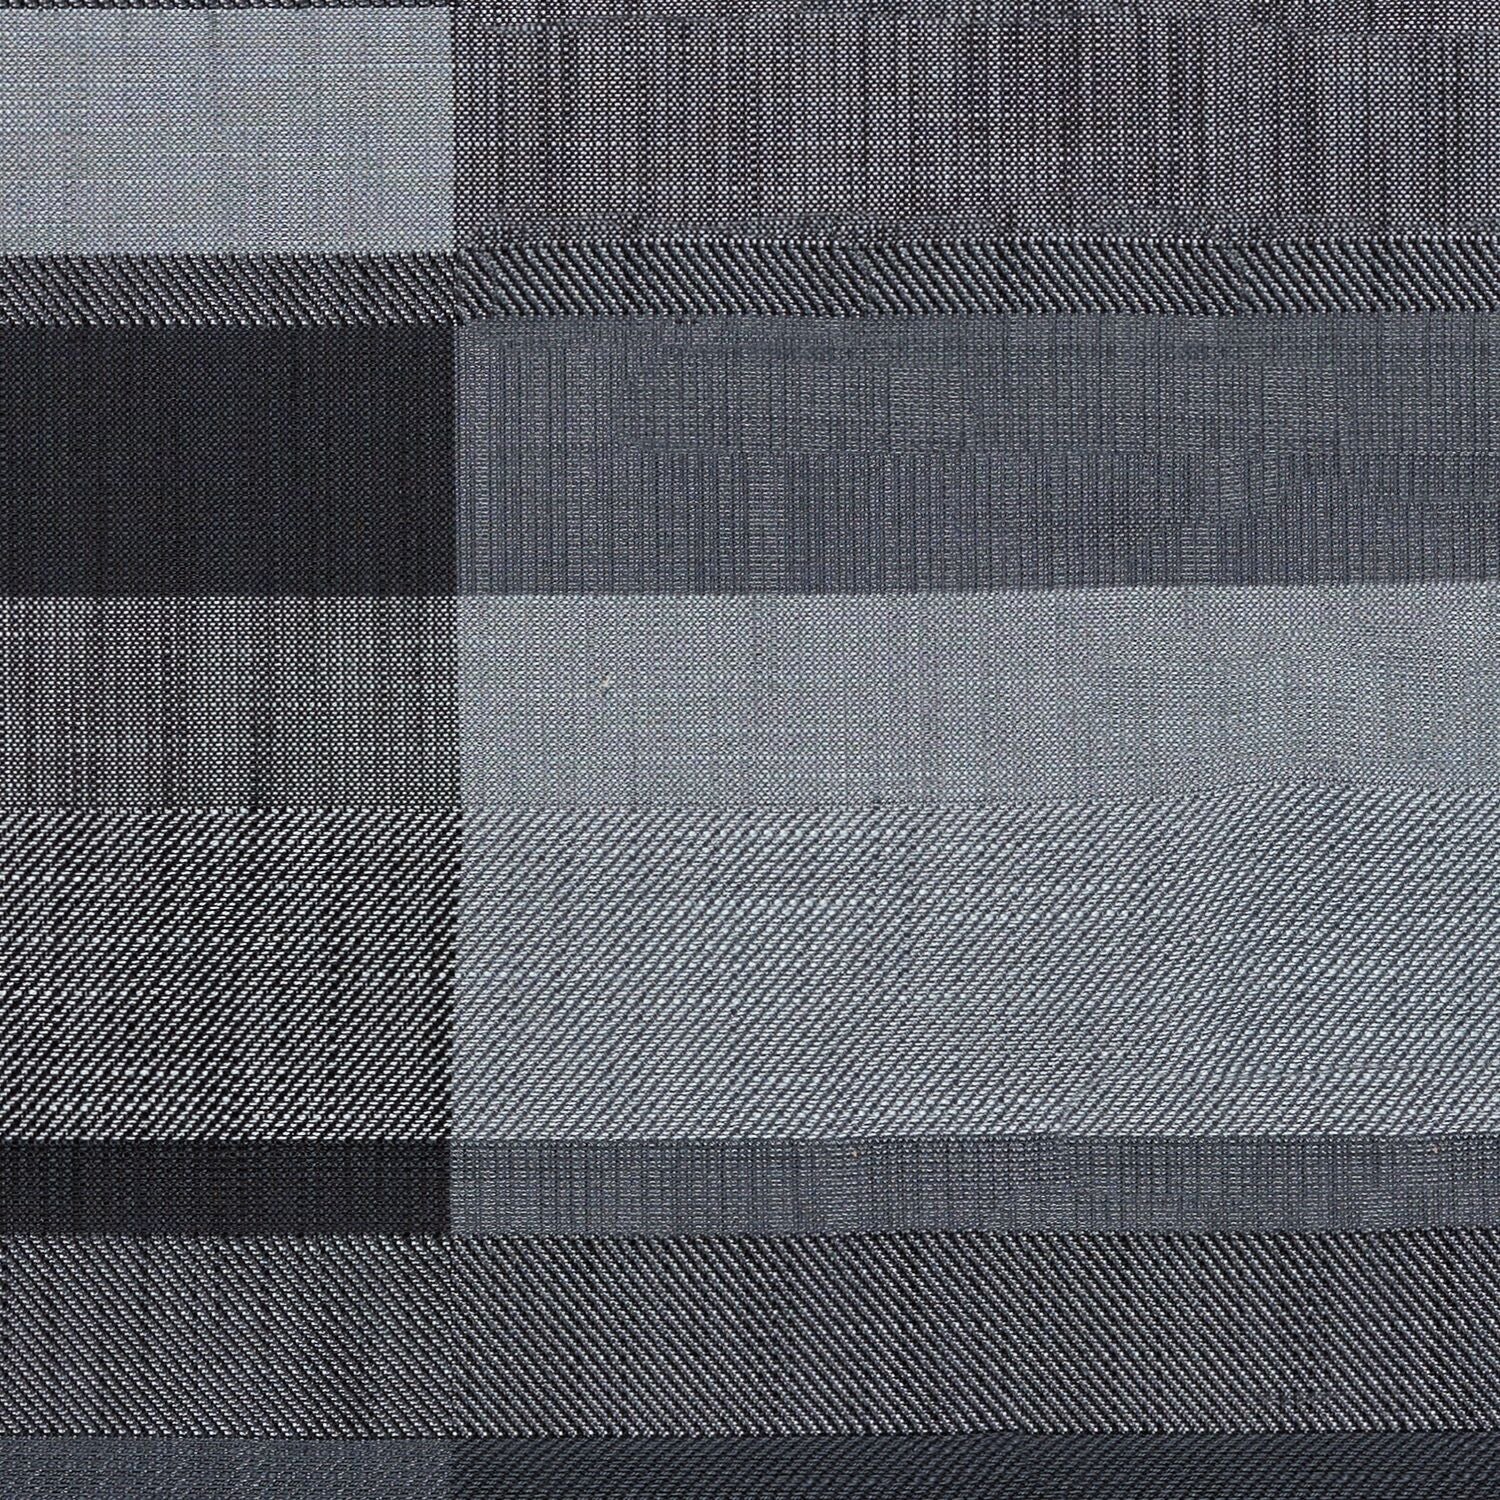 Structured Stripe - Shadow Weave - 4075 - 01